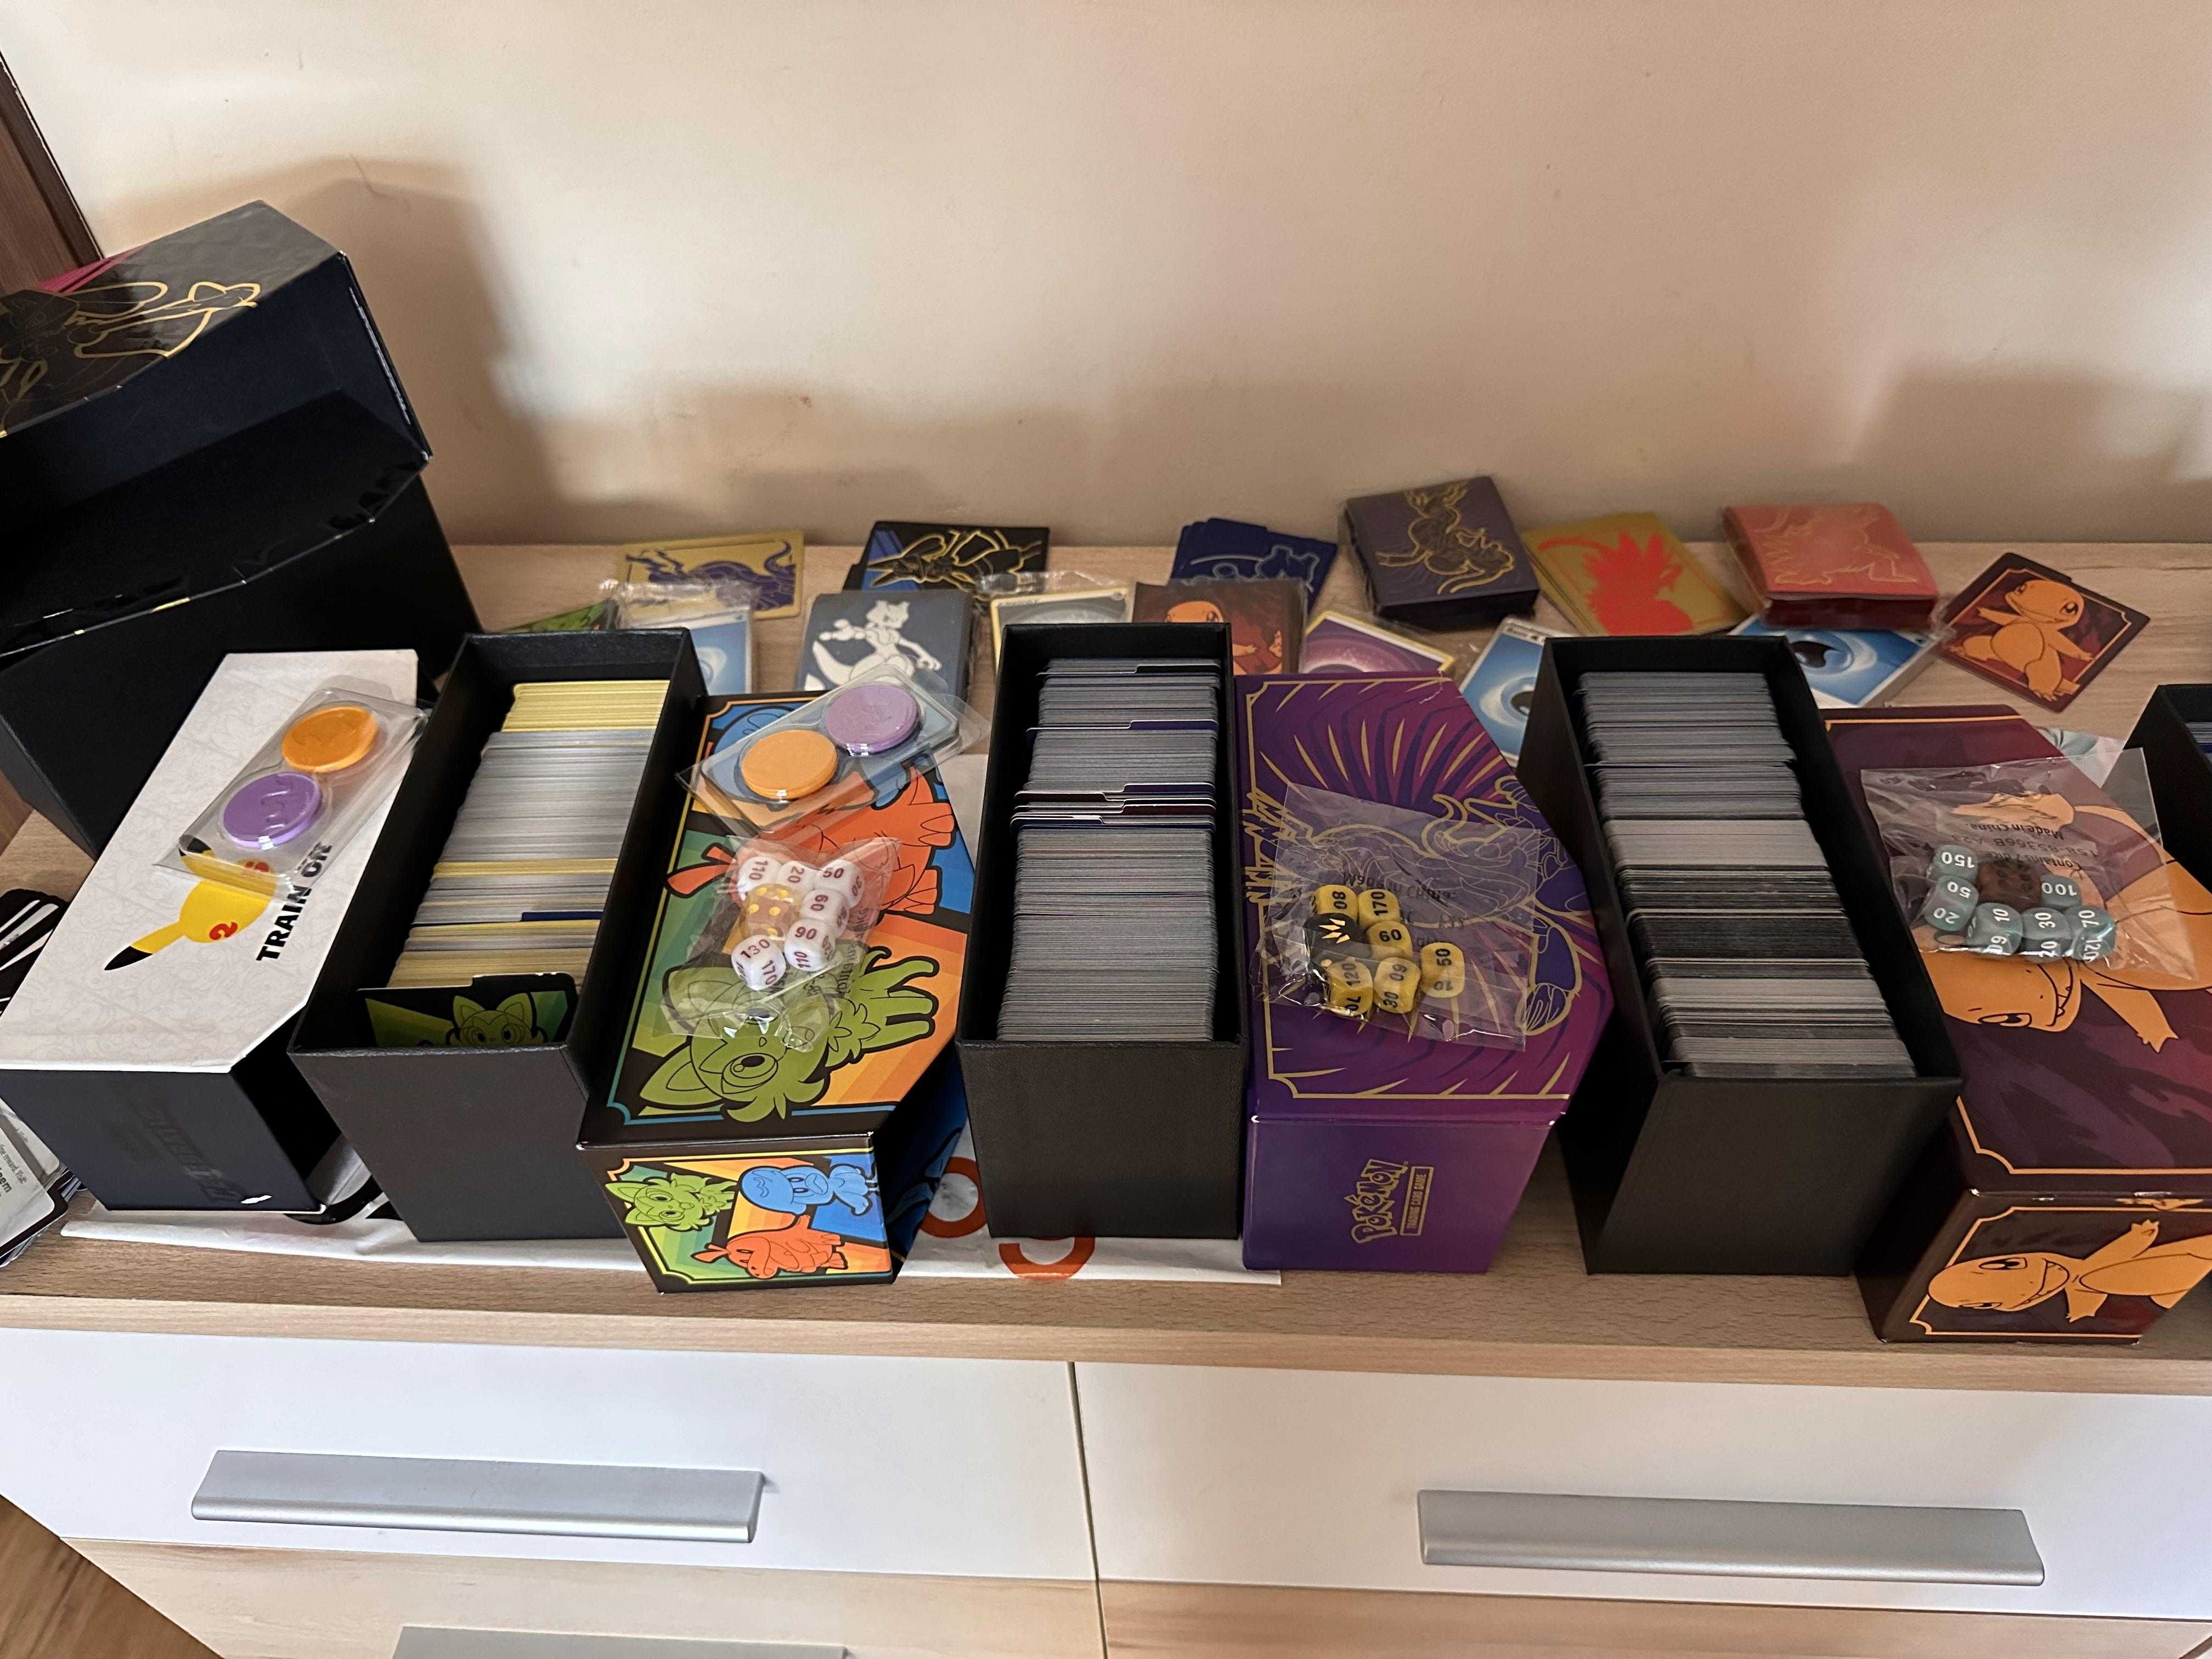 Покемон 500 карти кутия/Pokemon TCG Trainer Box 500 cards